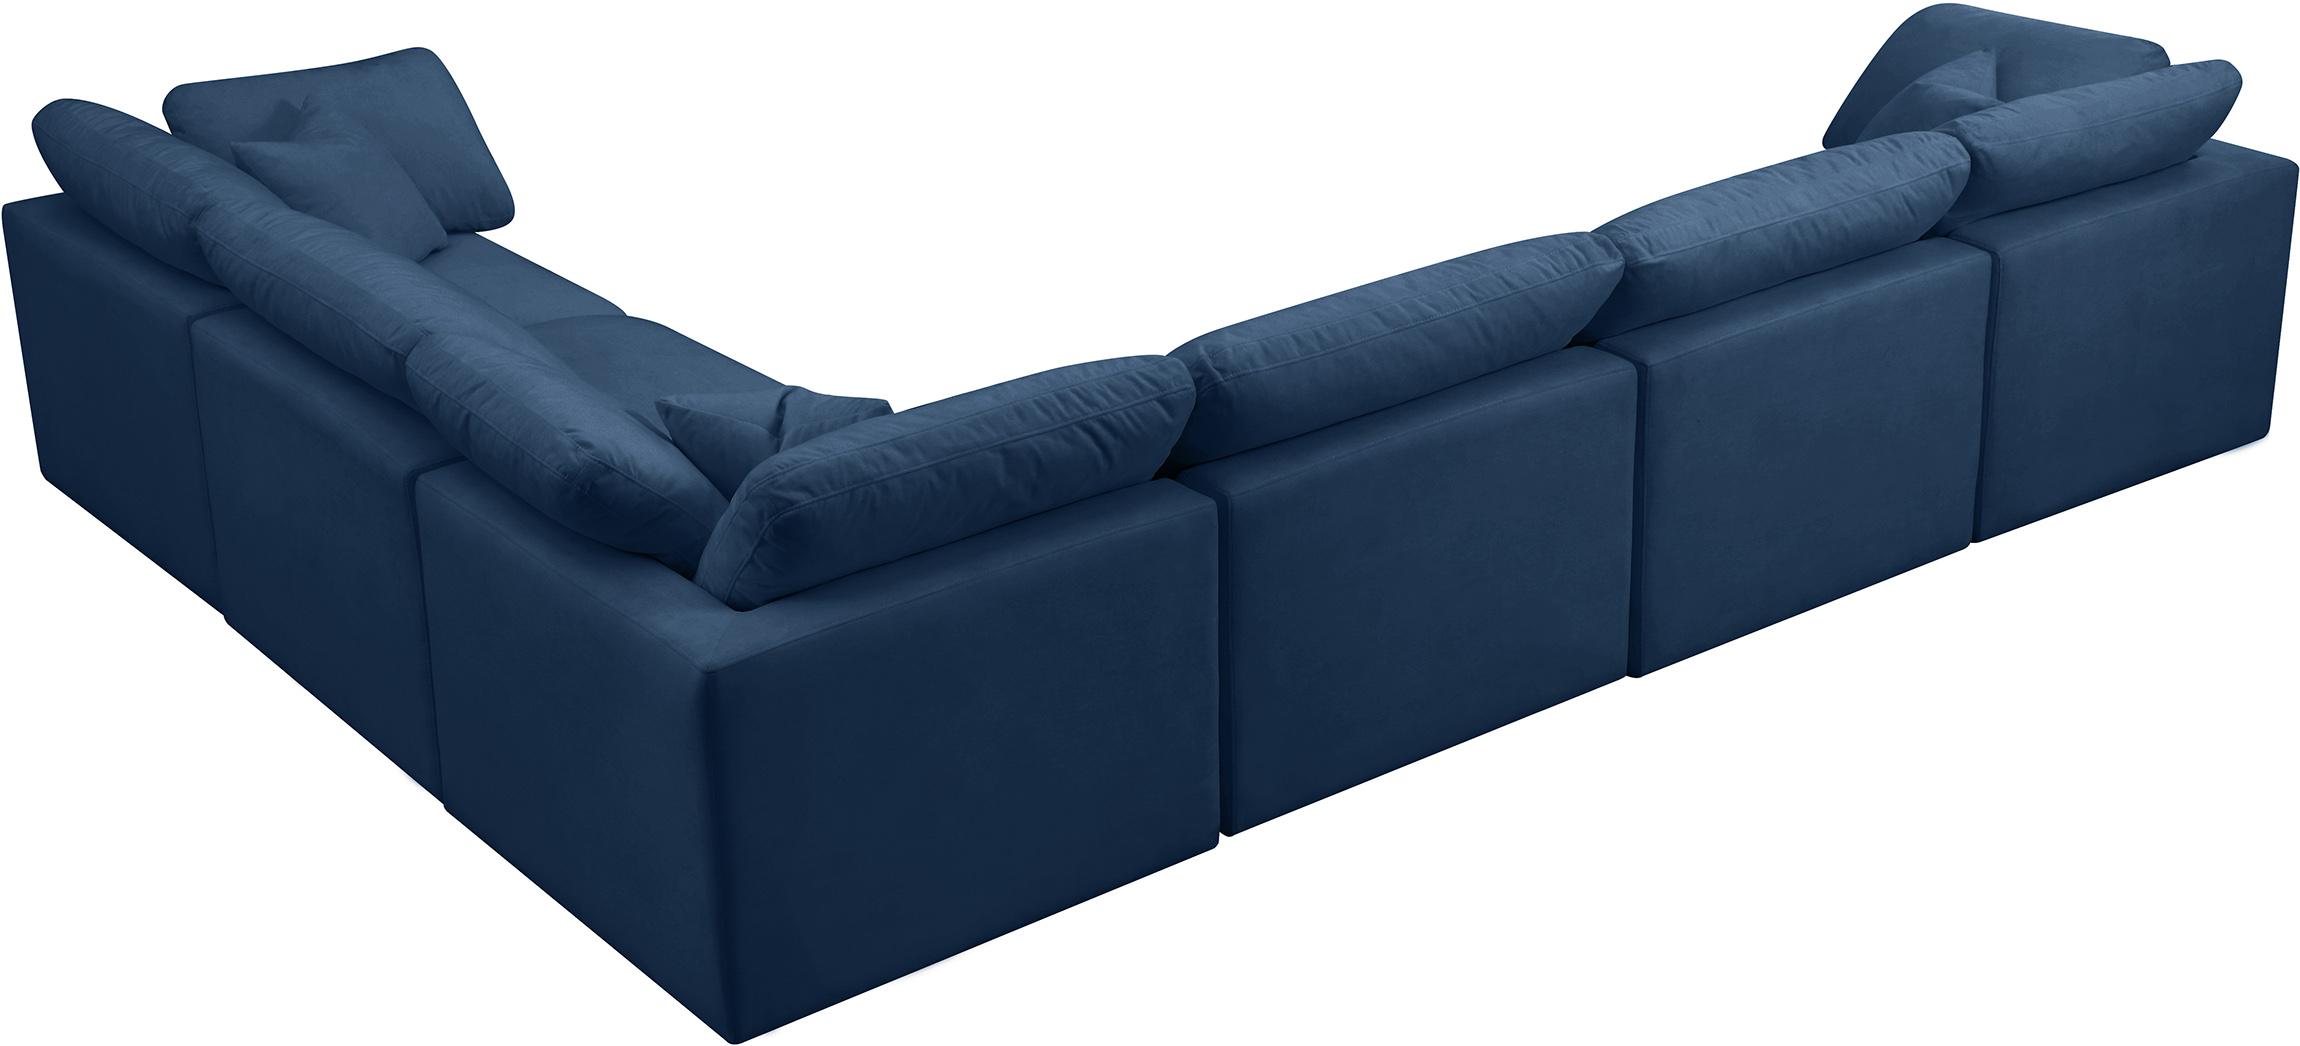 

    
Meridian Furniture 602Navy-Sec6A Modular Sectional Sofa Navy 602Navy-Sec6A
